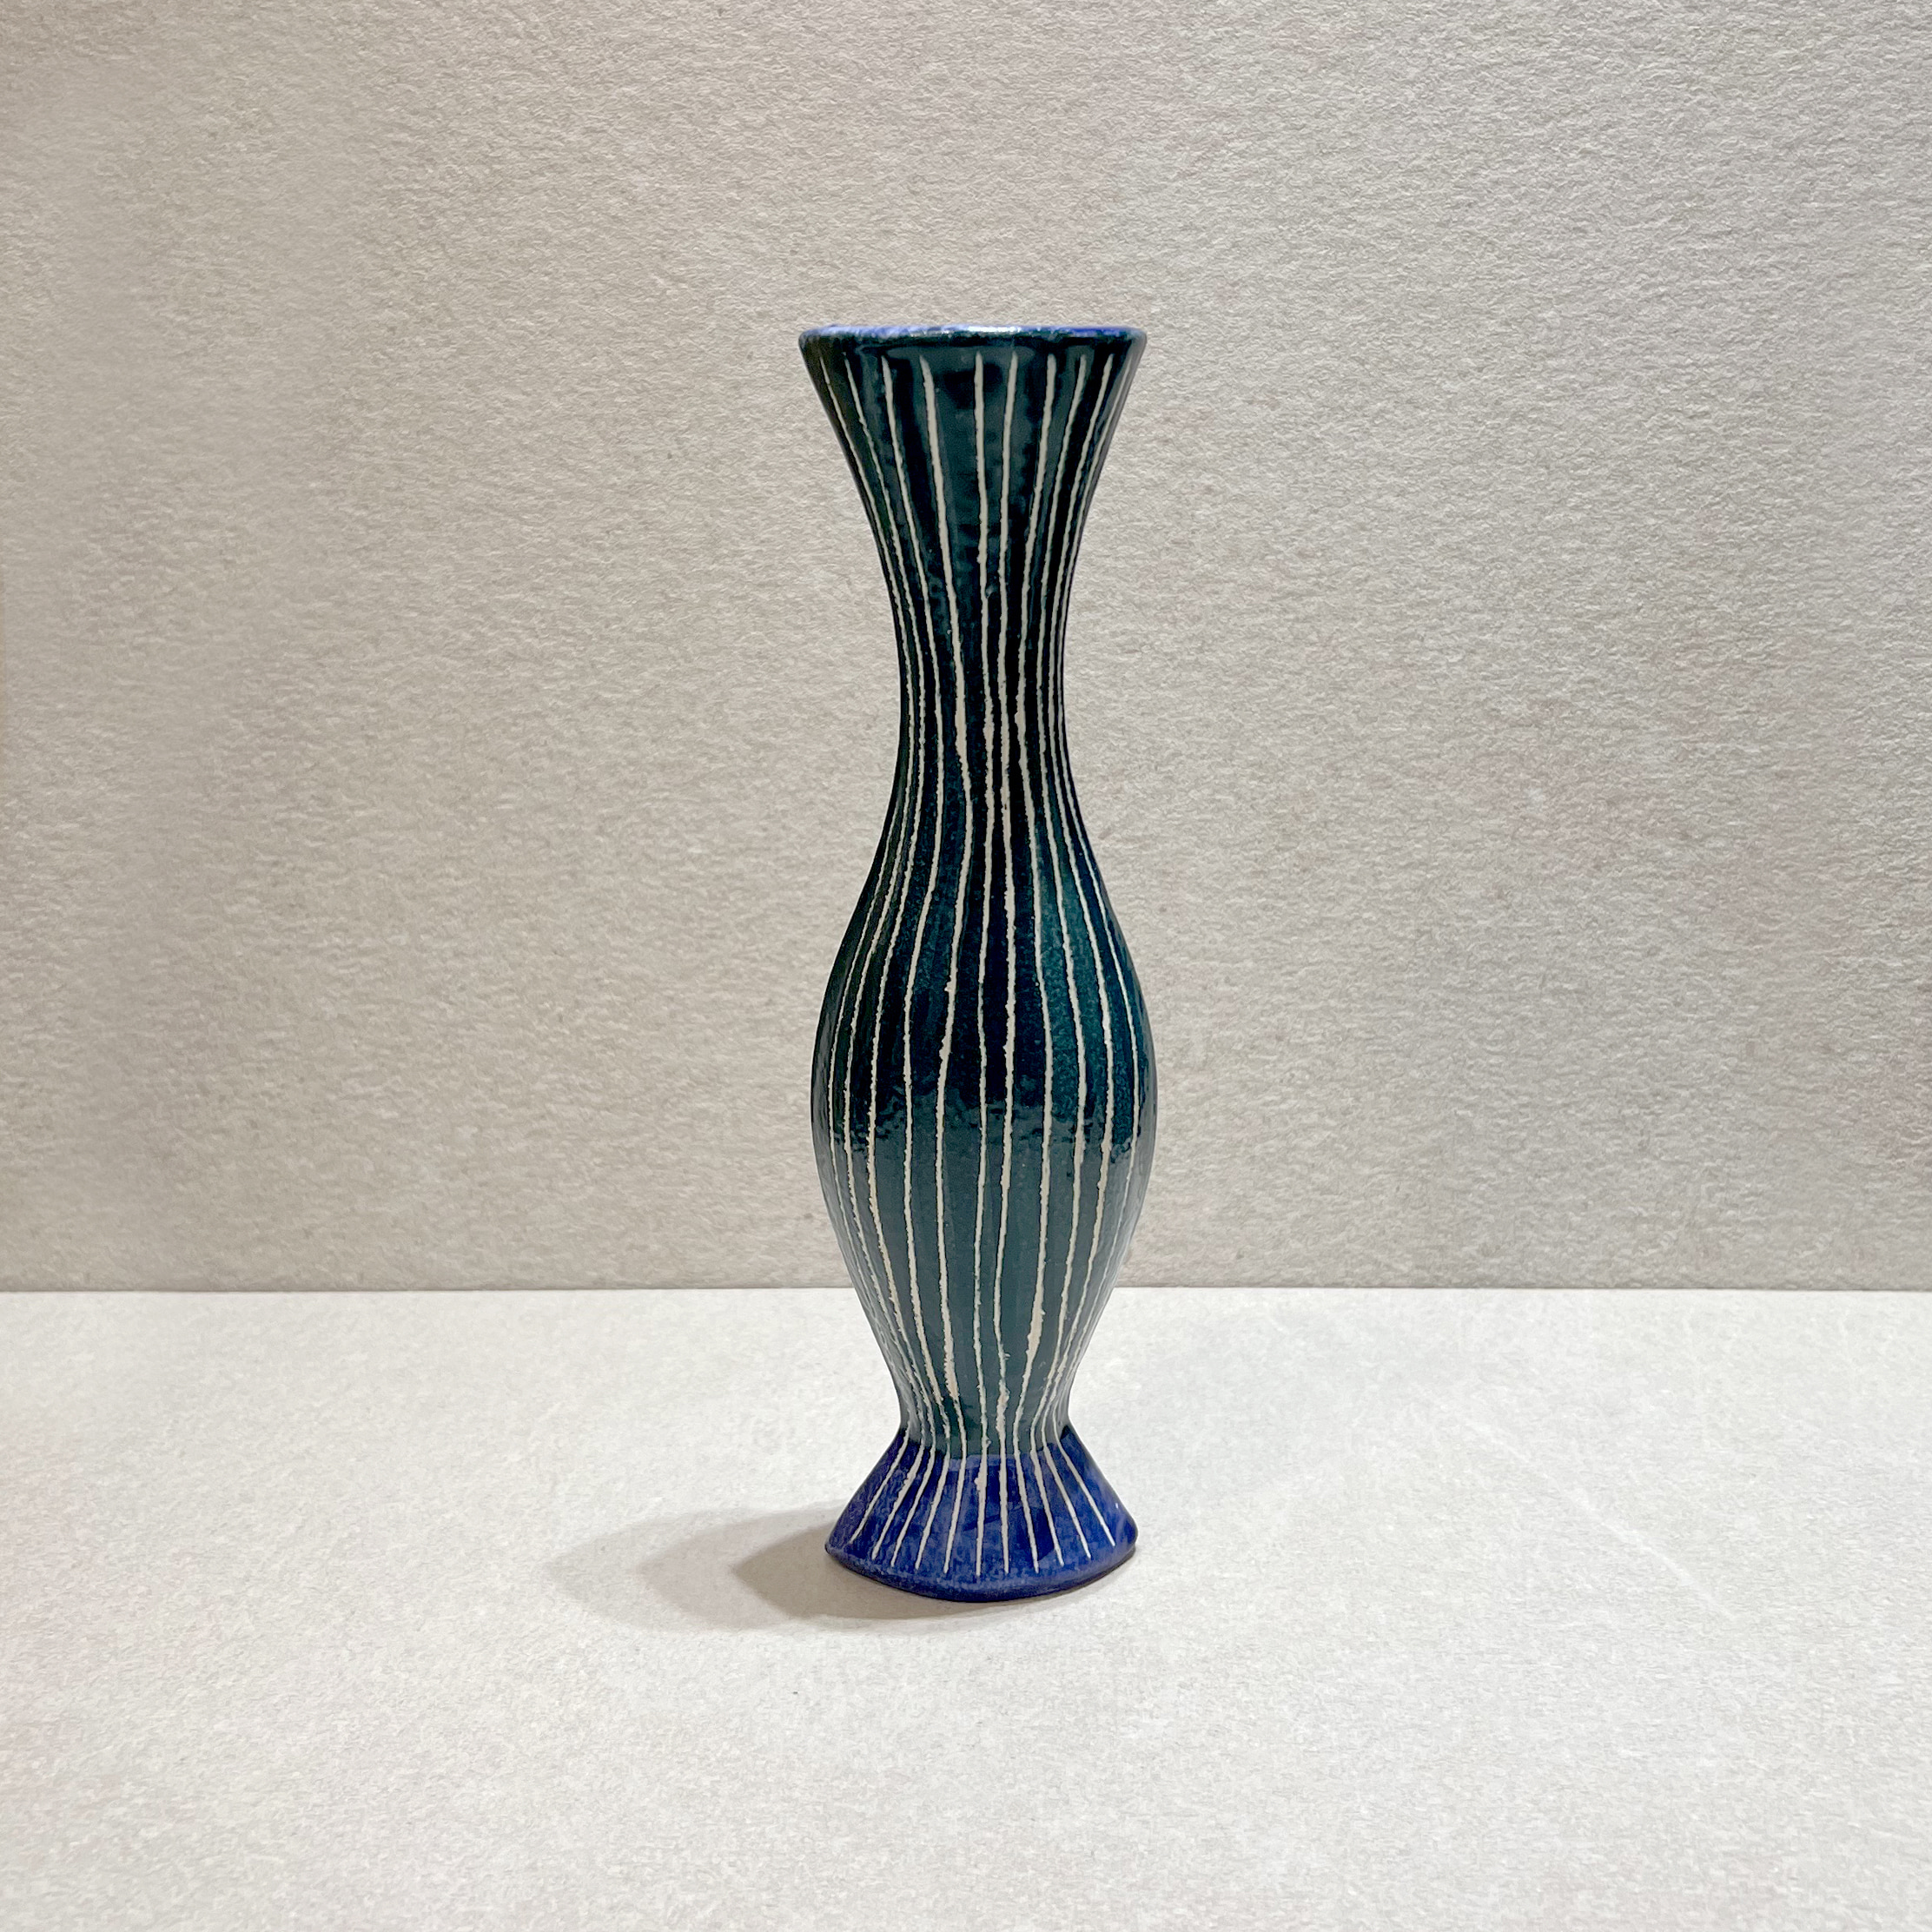 France Peters Studio Pottery Vase 1995s